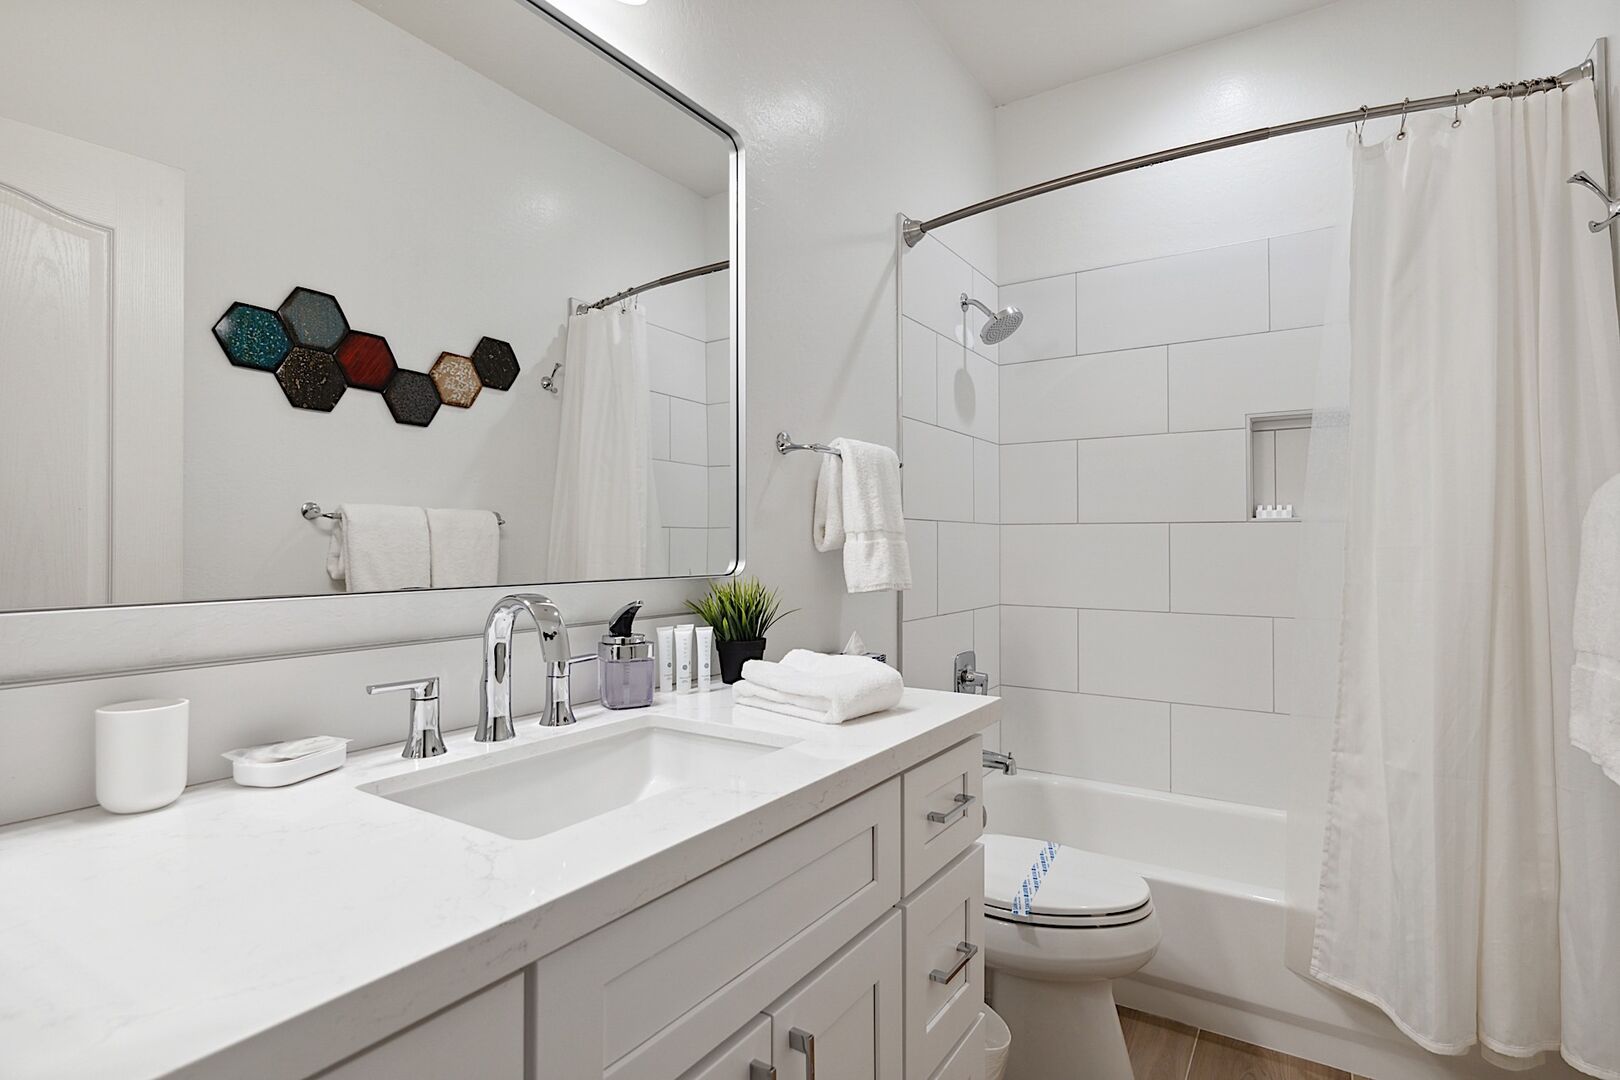 Second Bathroom - Tub & Shower Combo